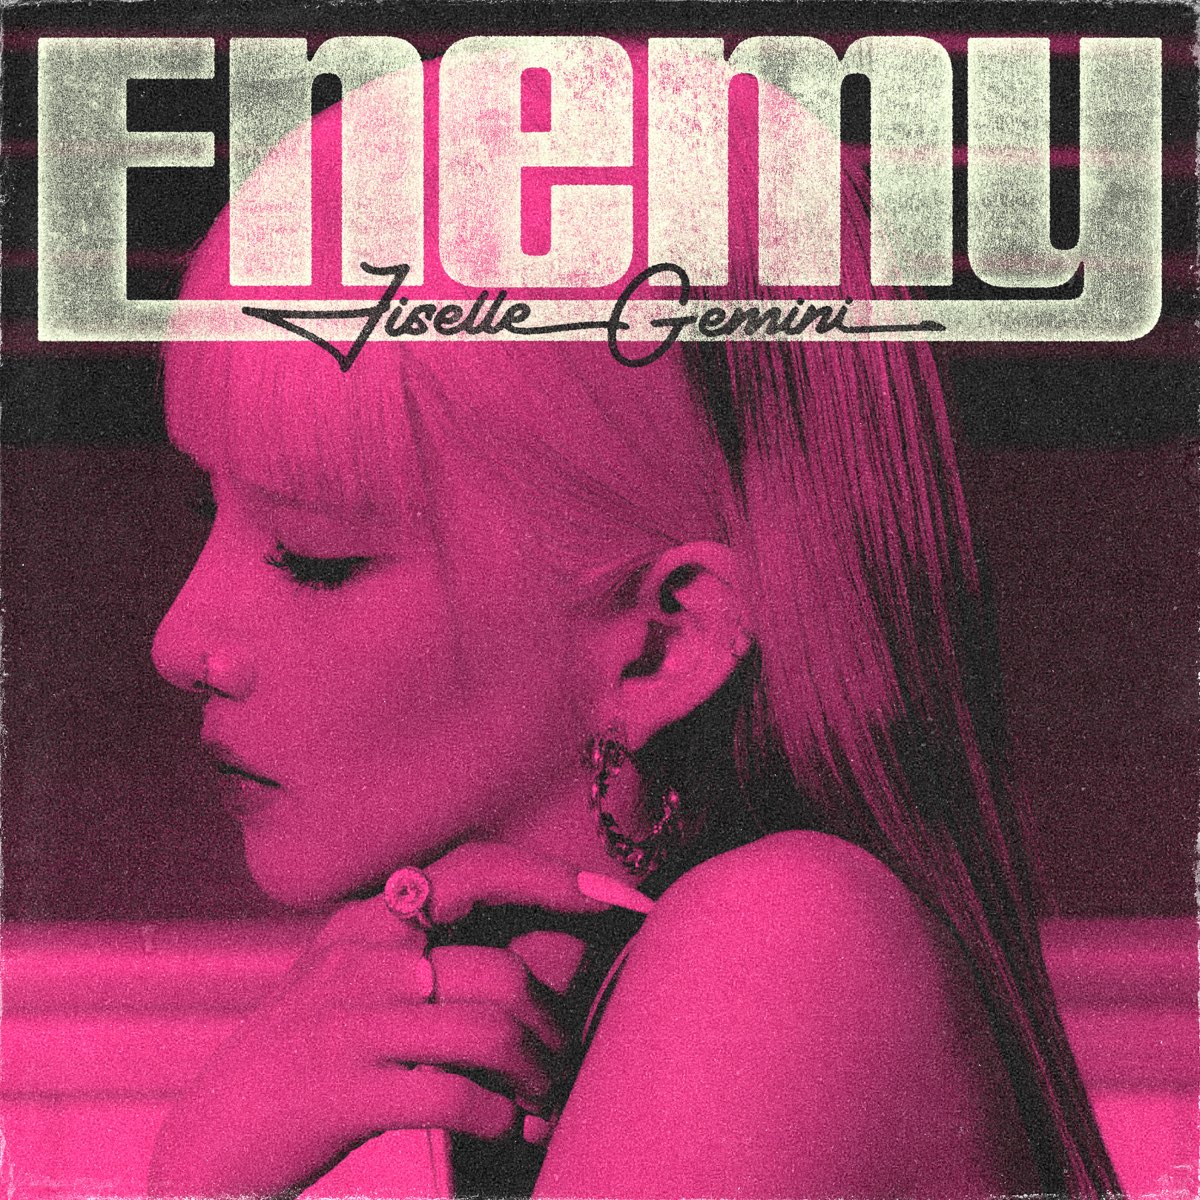 Jiselle & GEMINI — Enemy cover artwork